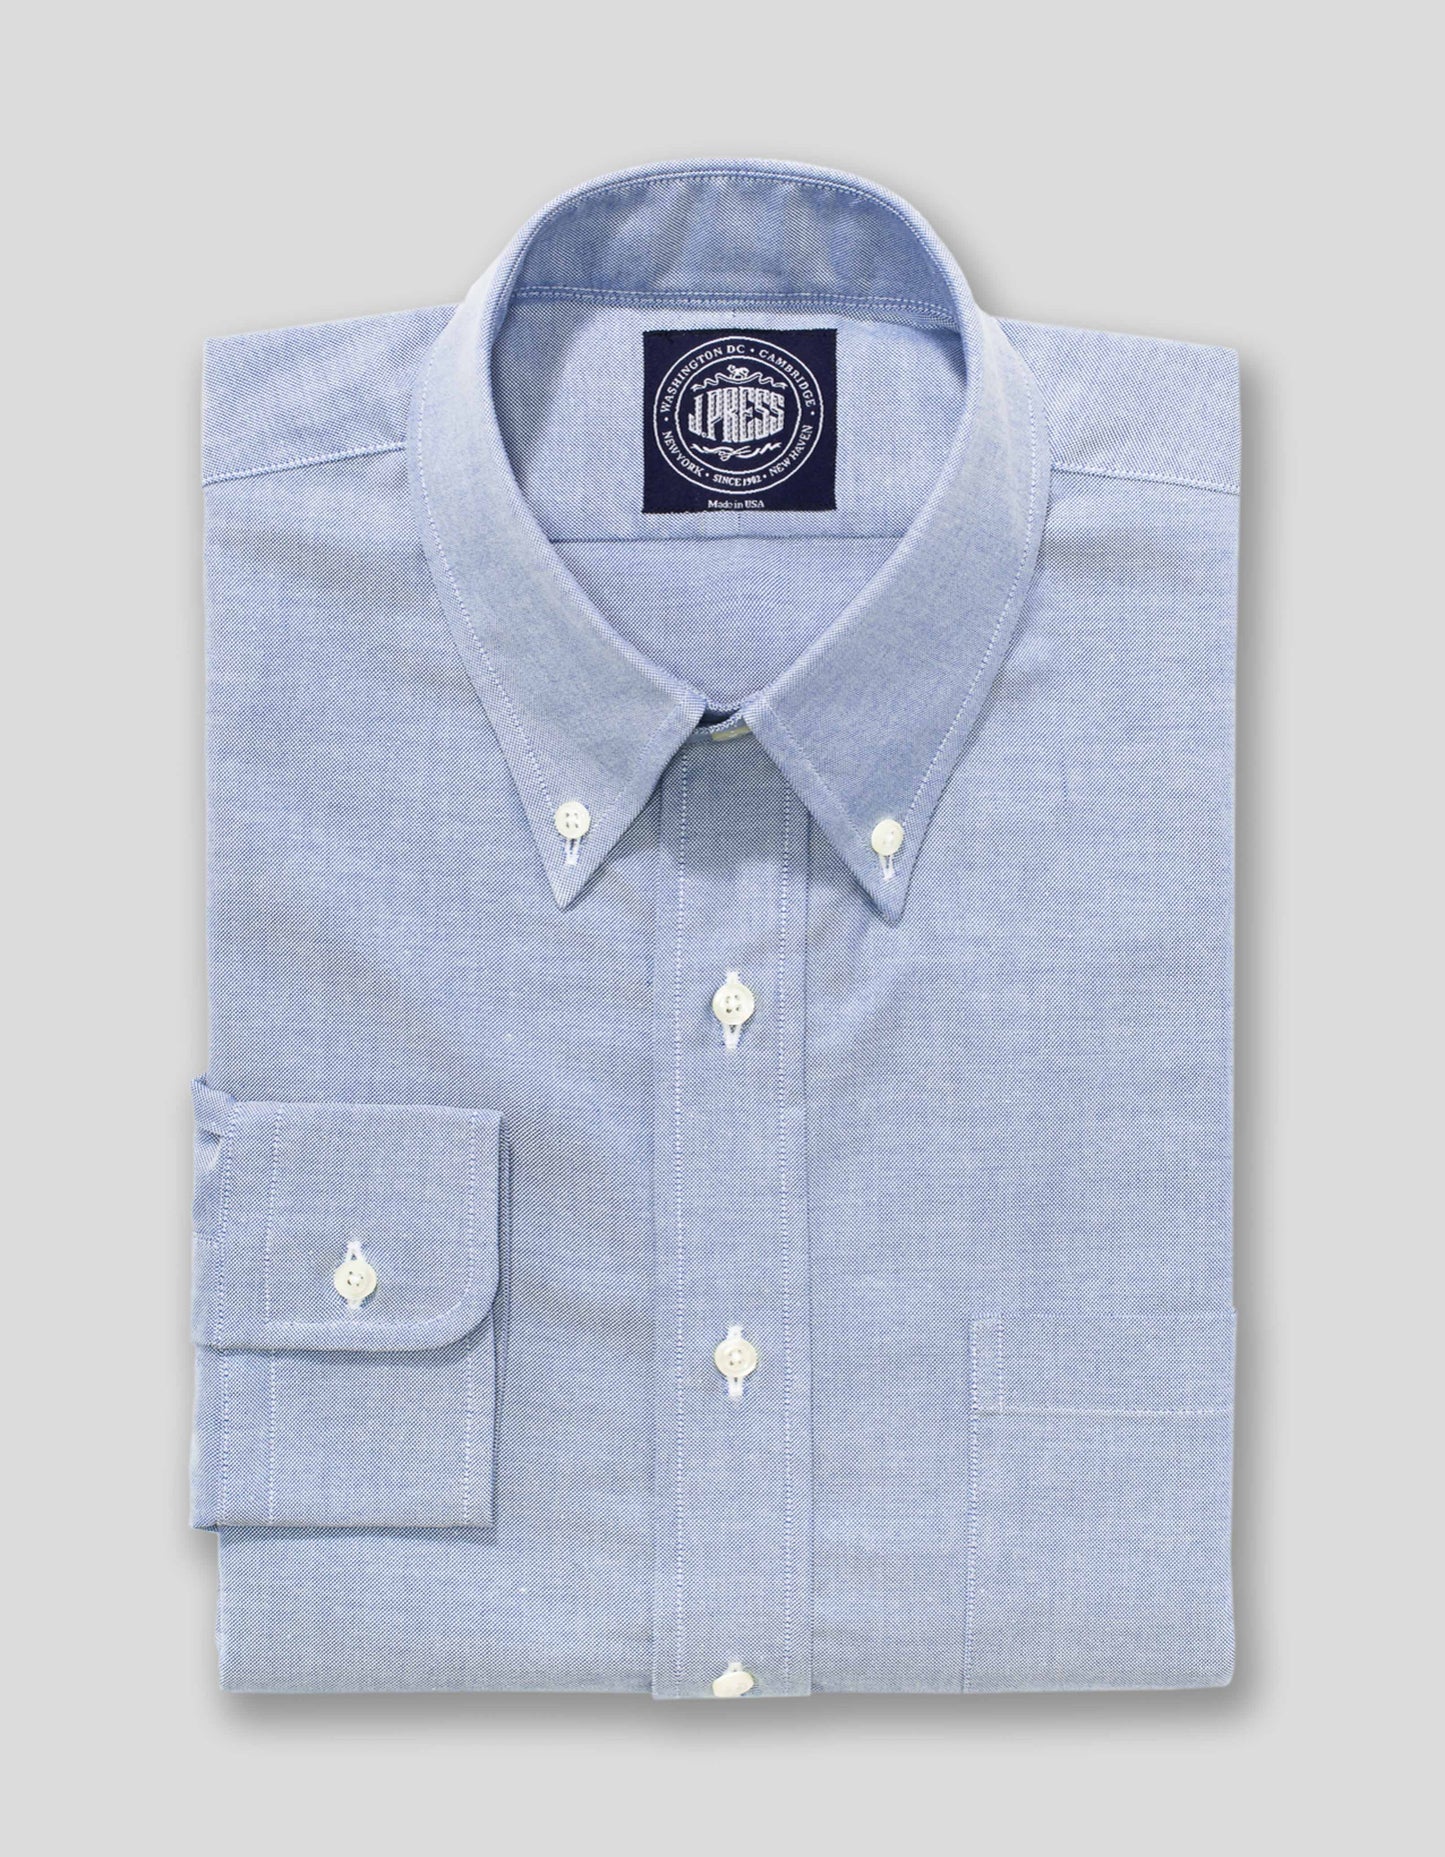 BLUE OXFORD DRESS SHIRT - TRIM FIT